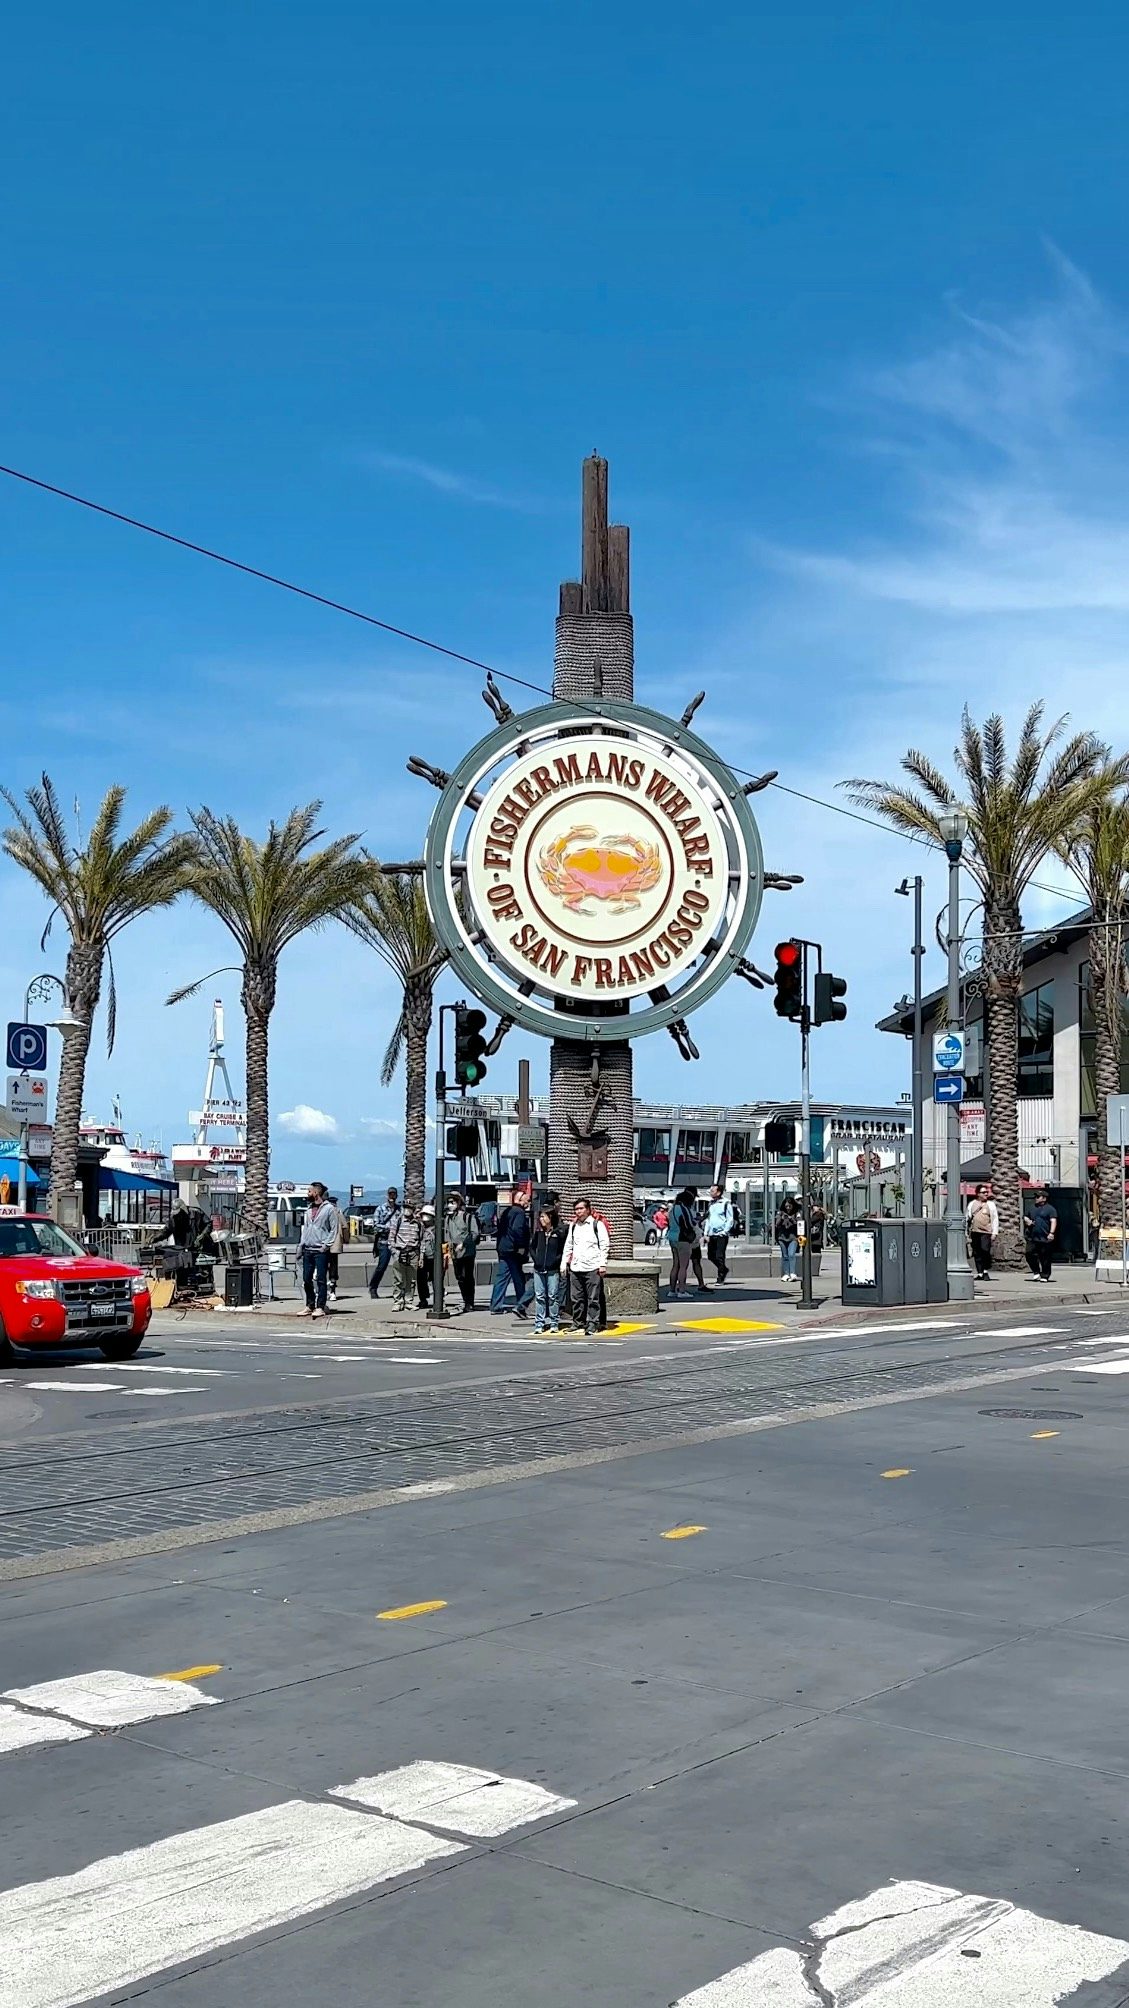 Fisherman's Wharf San Francisco: a local's review.